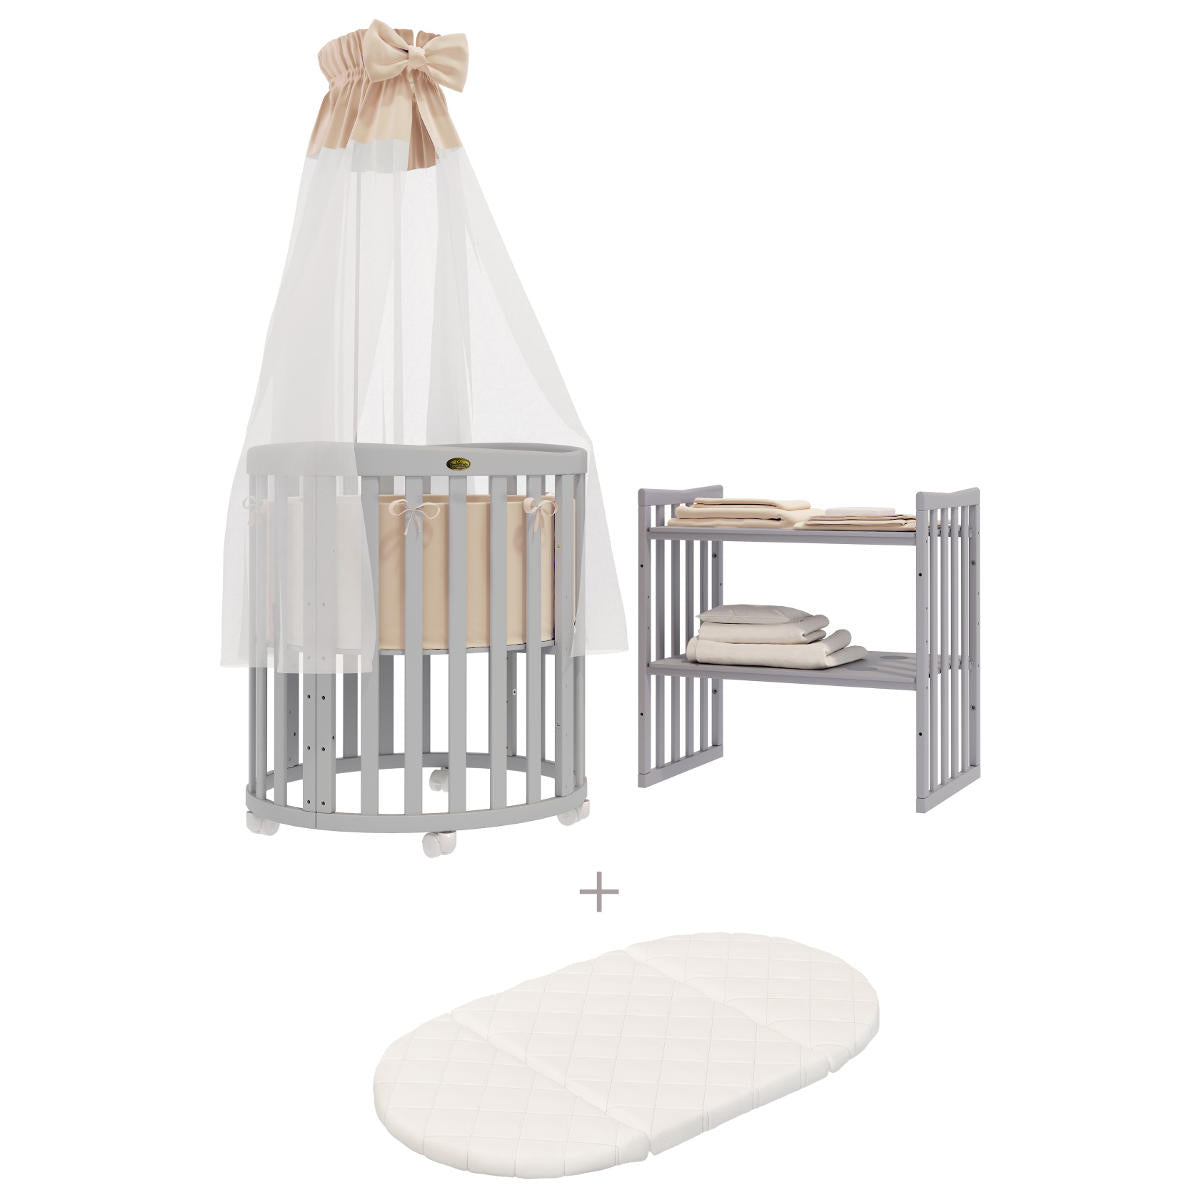 Baby Crib SmartGrow 7in1 - Inclusive Classic Bedding Set